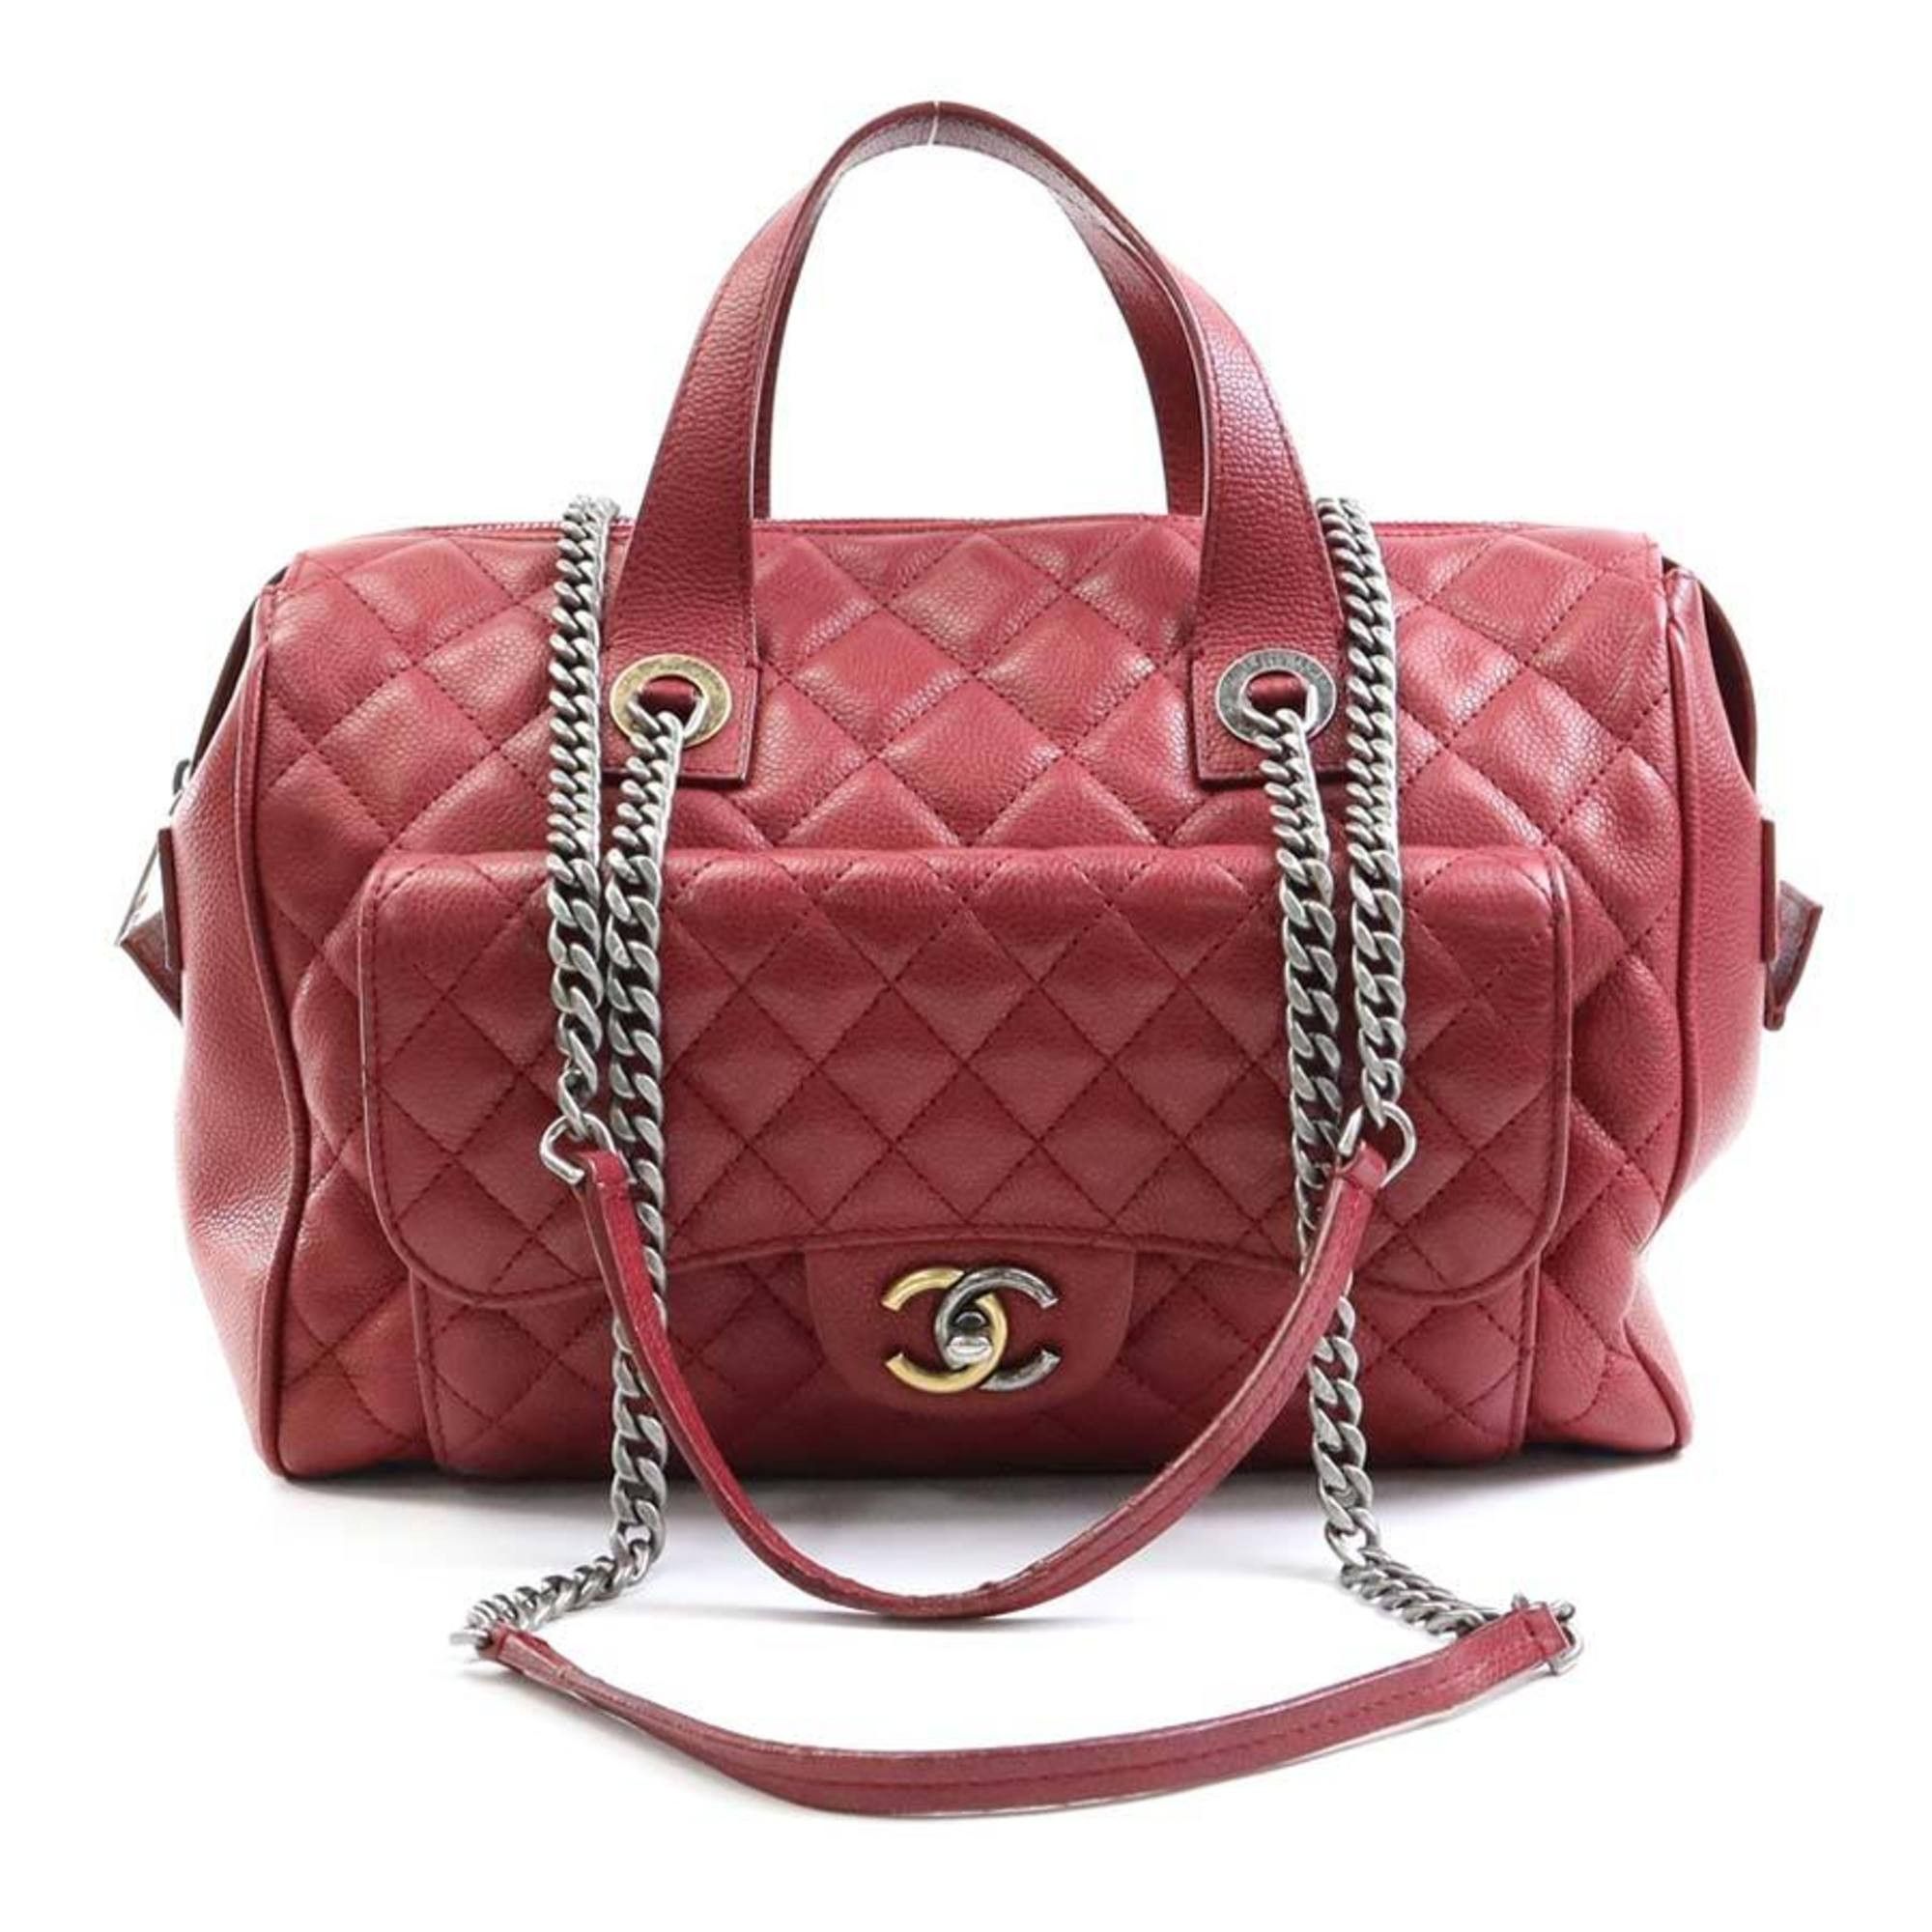 Chanel Chanel Women's Caviar Leather Handbag,Shoulder Bag Burgundy Size ONE SIZE - 1 Preview